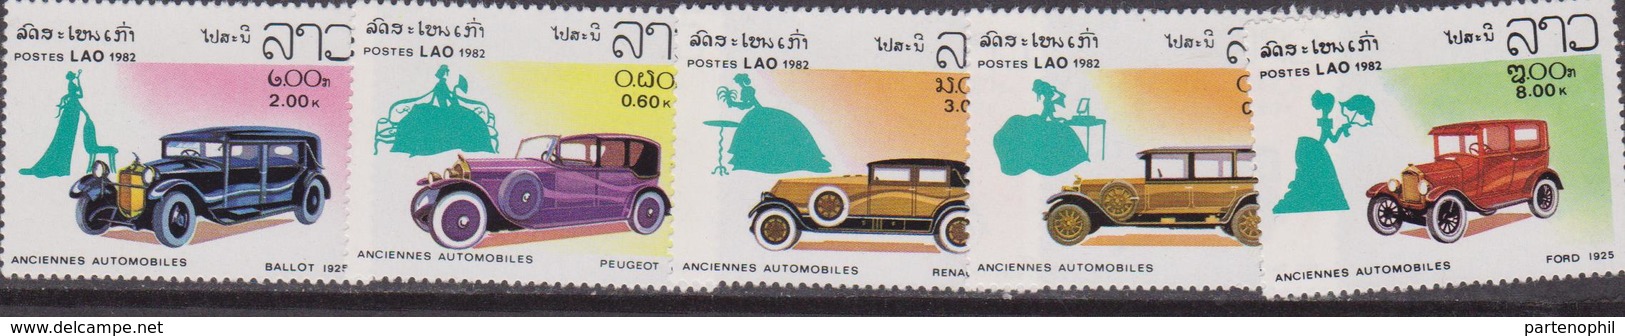 Laos - 1982 Cars Automobili Vintage Set MNH - Laos